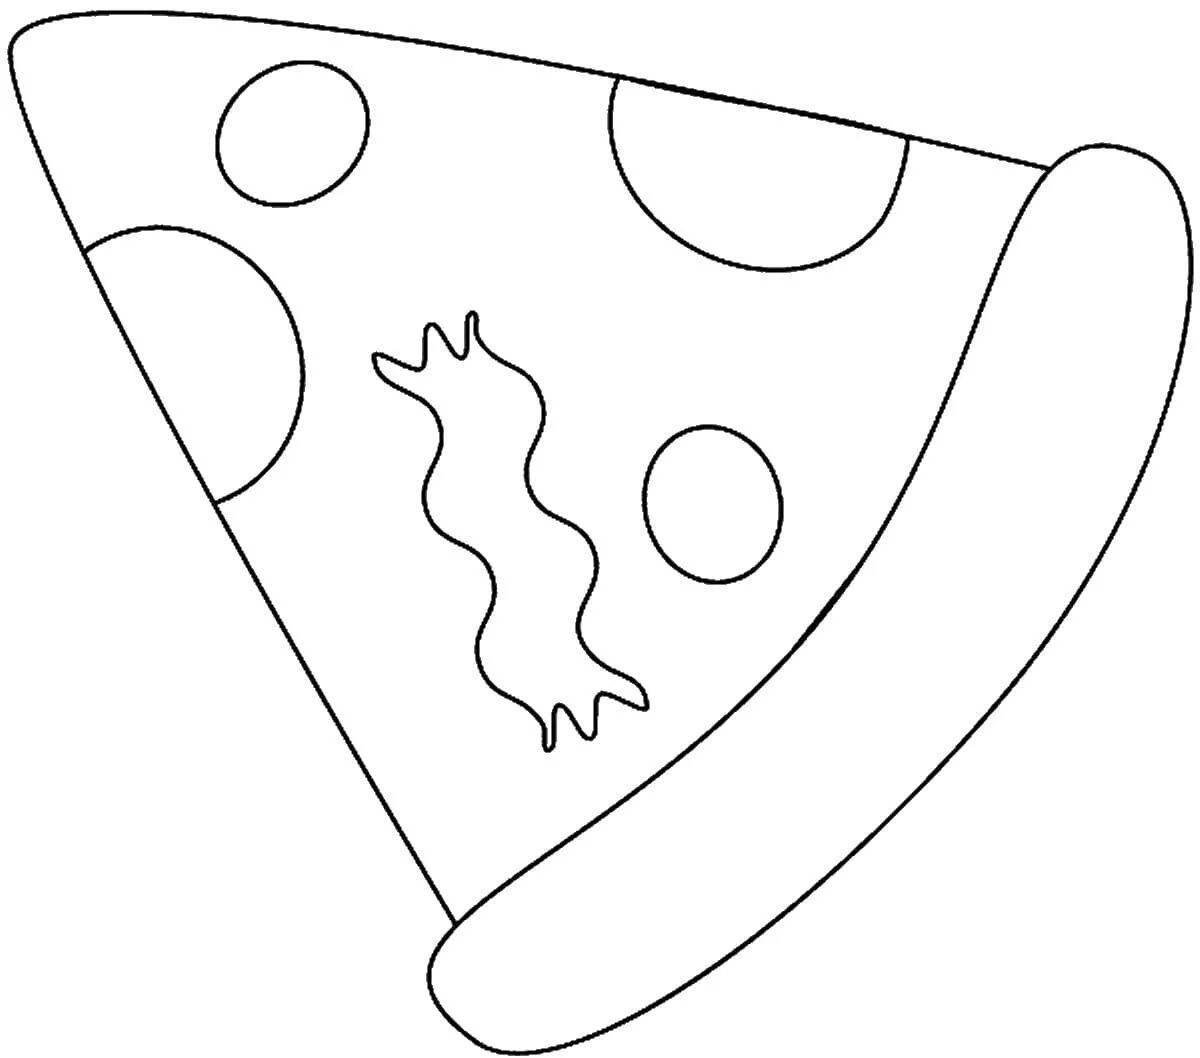 Exquisite coloring pizza slice